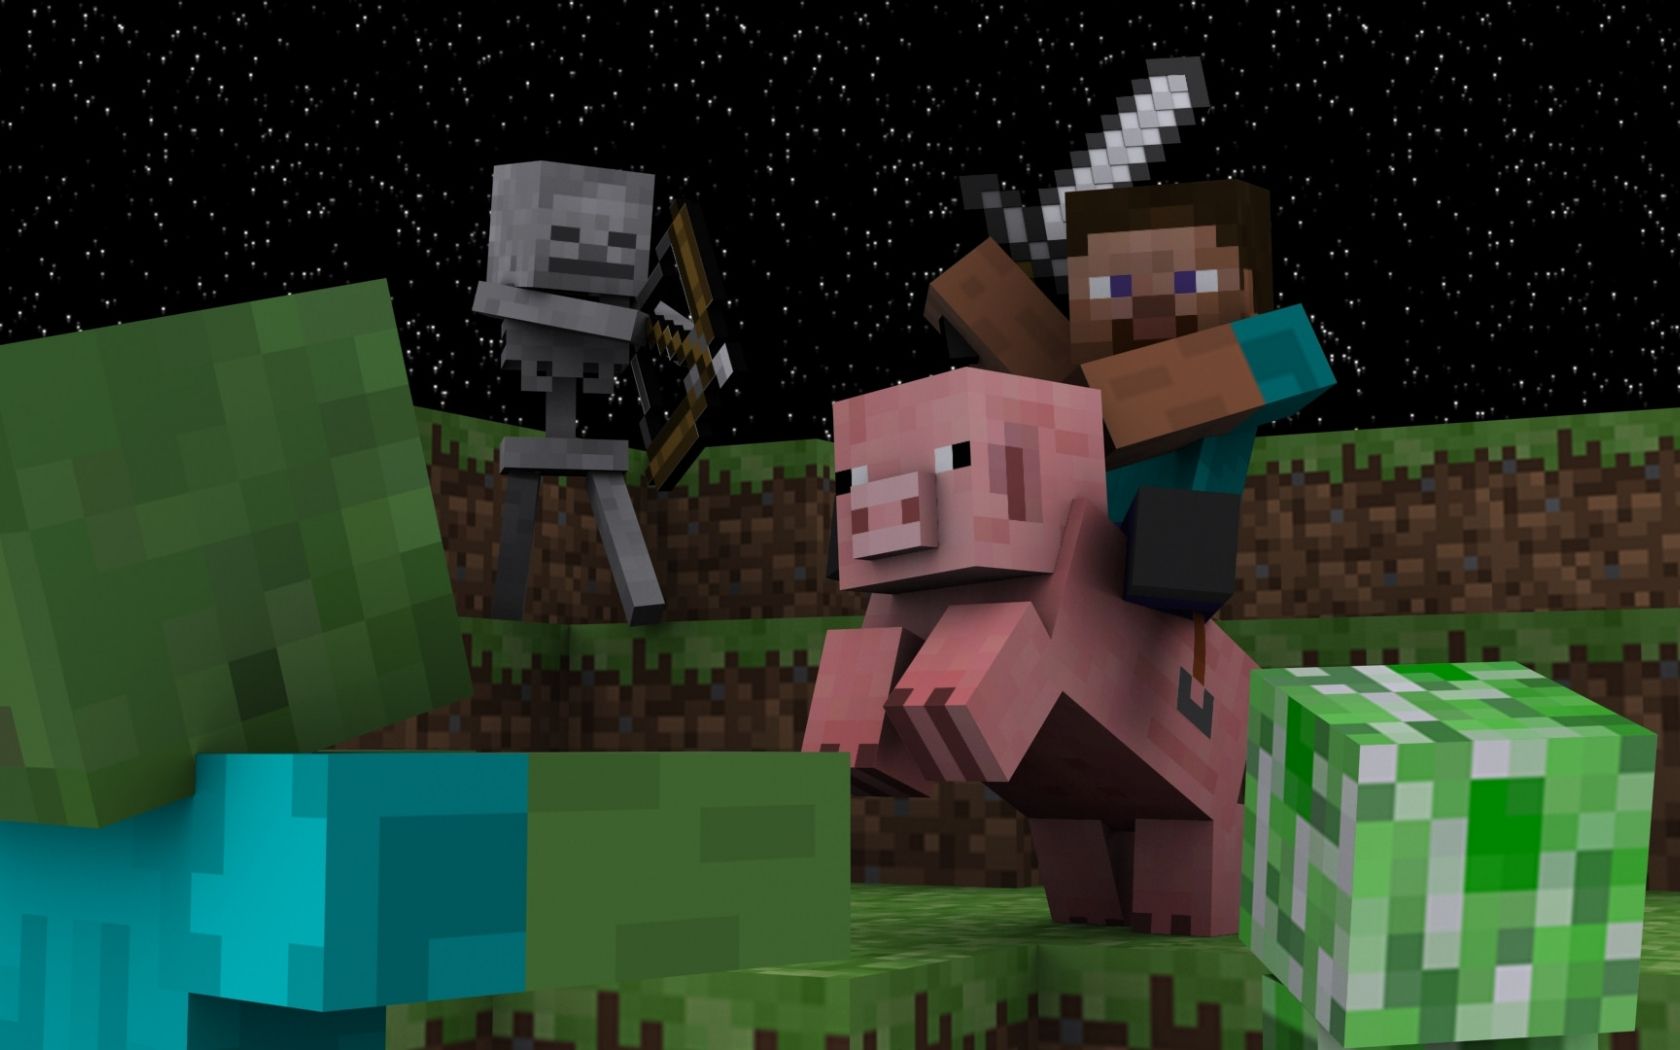 Free download Minecraft Pig Wallpaper Pig ride wallpaper pig ride